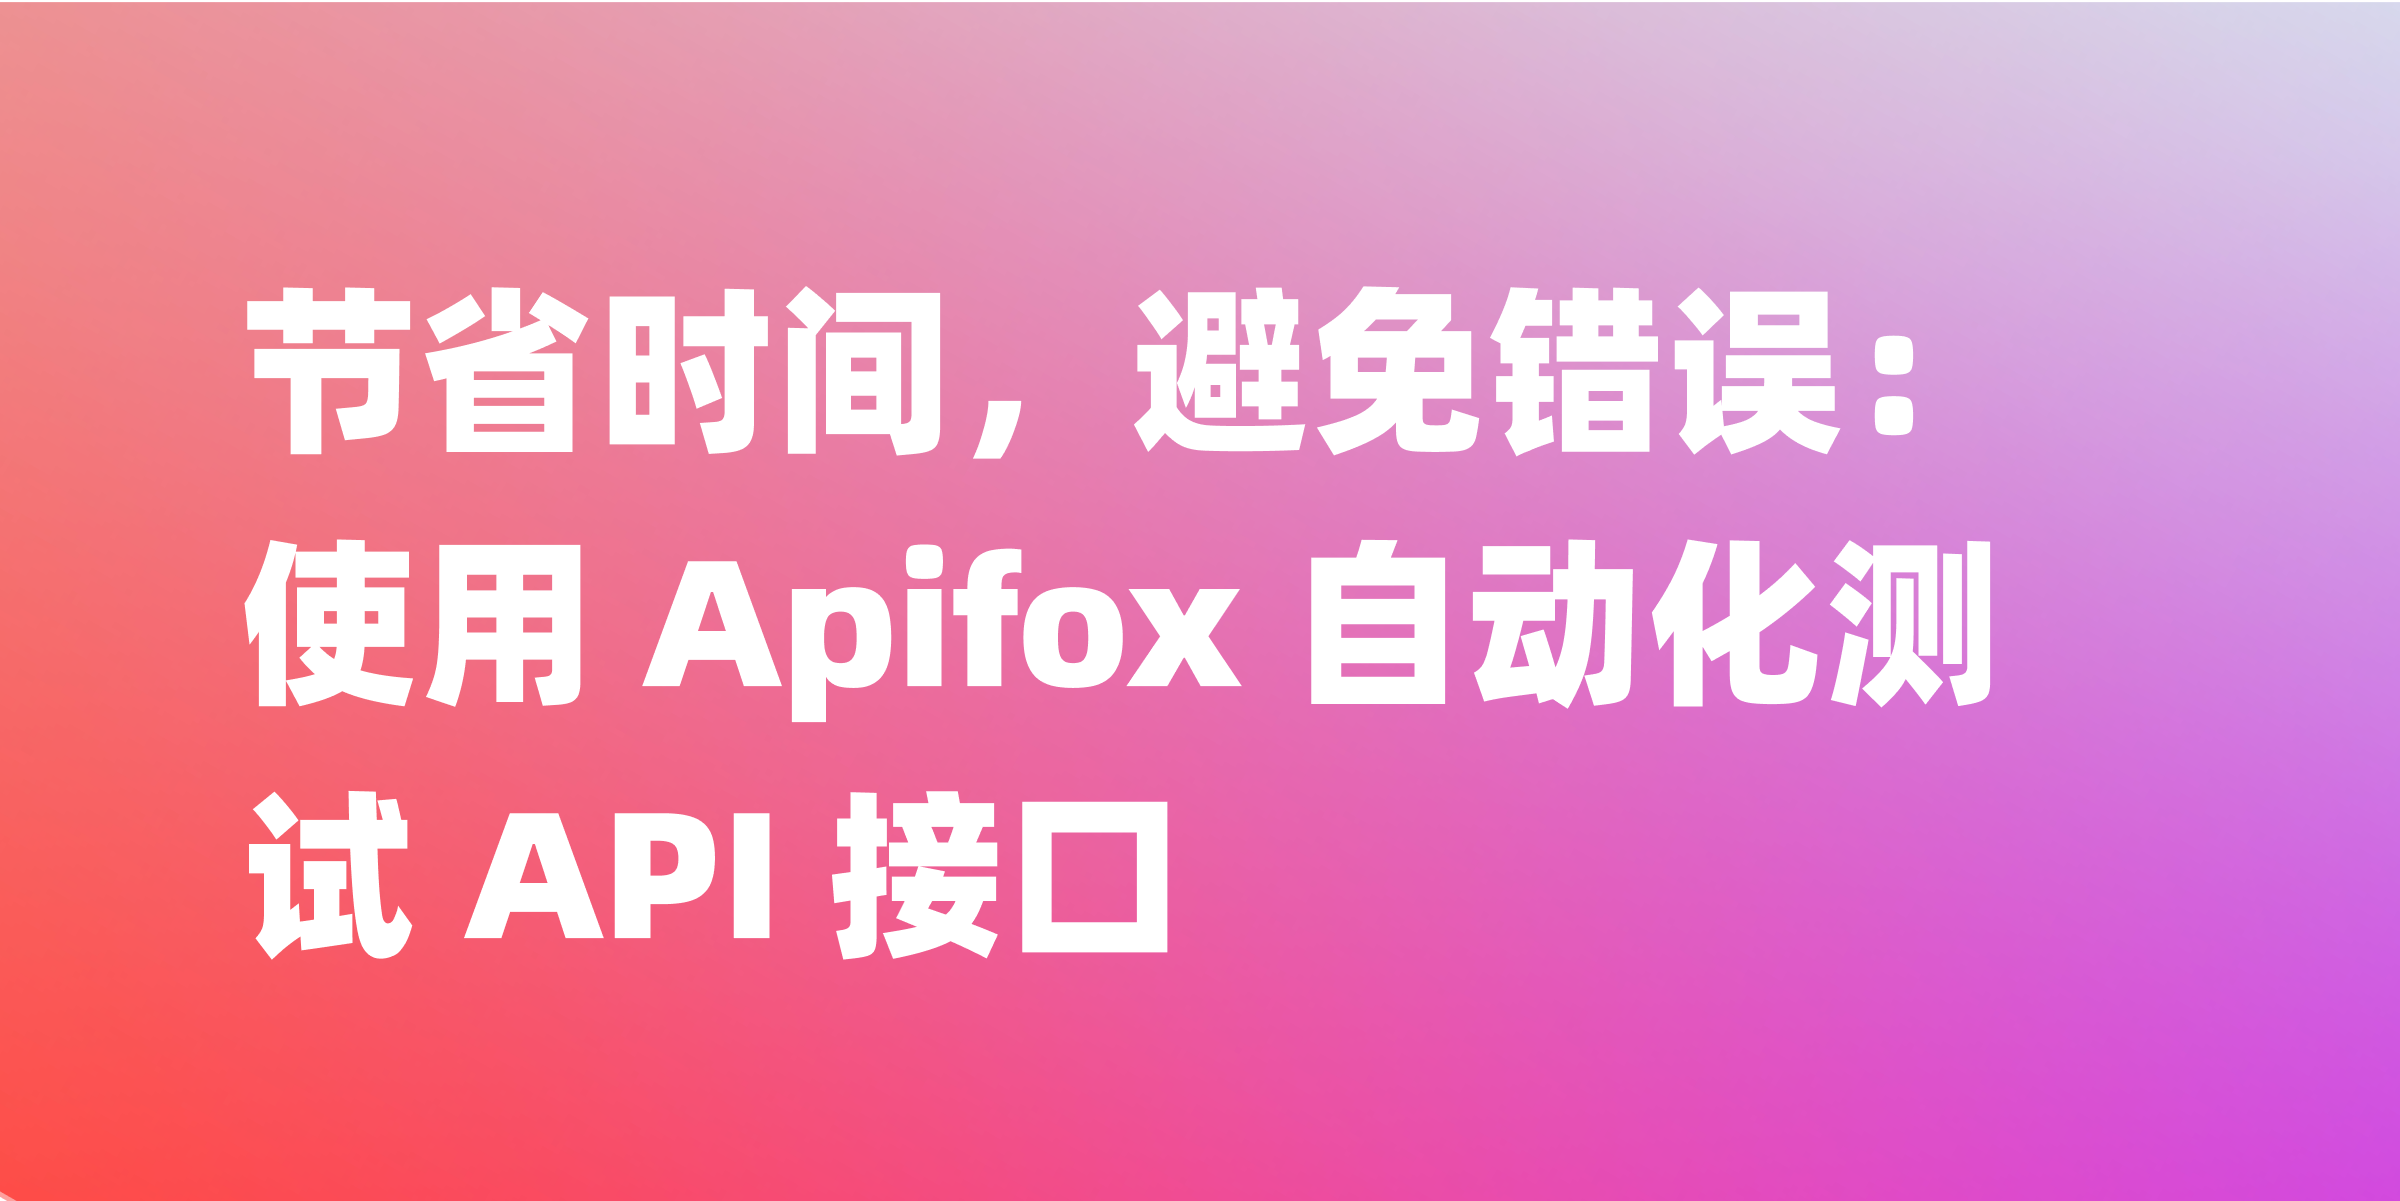 Apifox：API 接口自动化测试完全指南